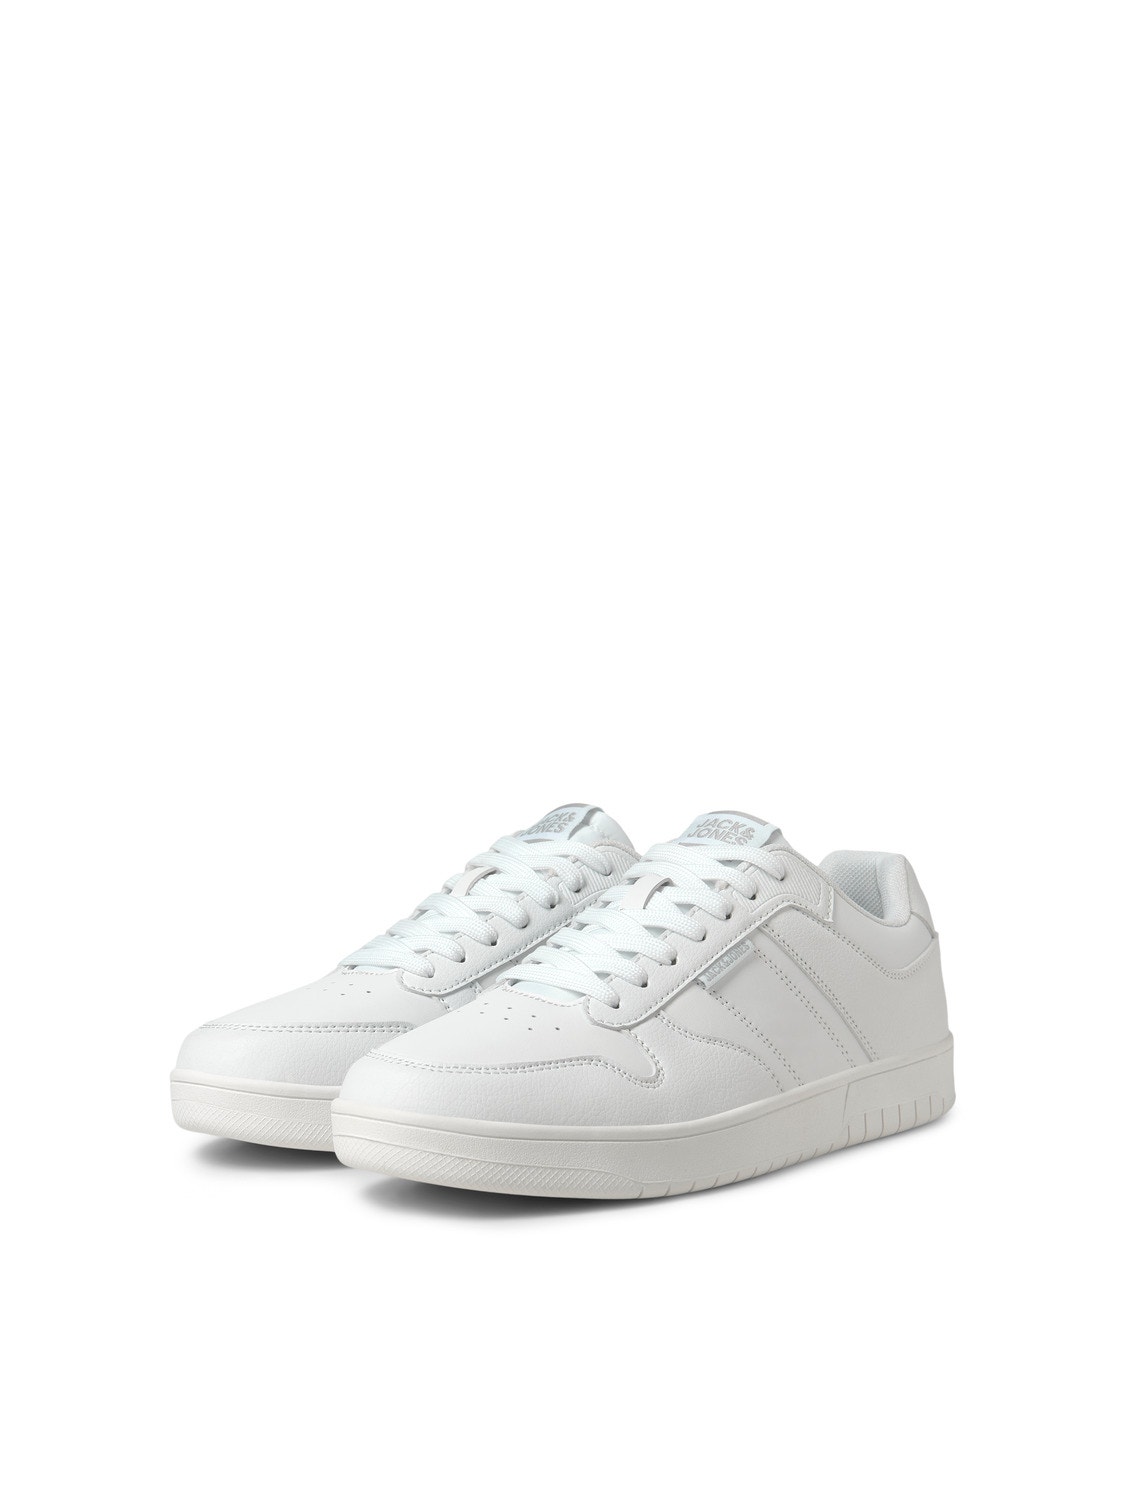 Jack & Jones Polyurethan Sneakers -White - 12203668